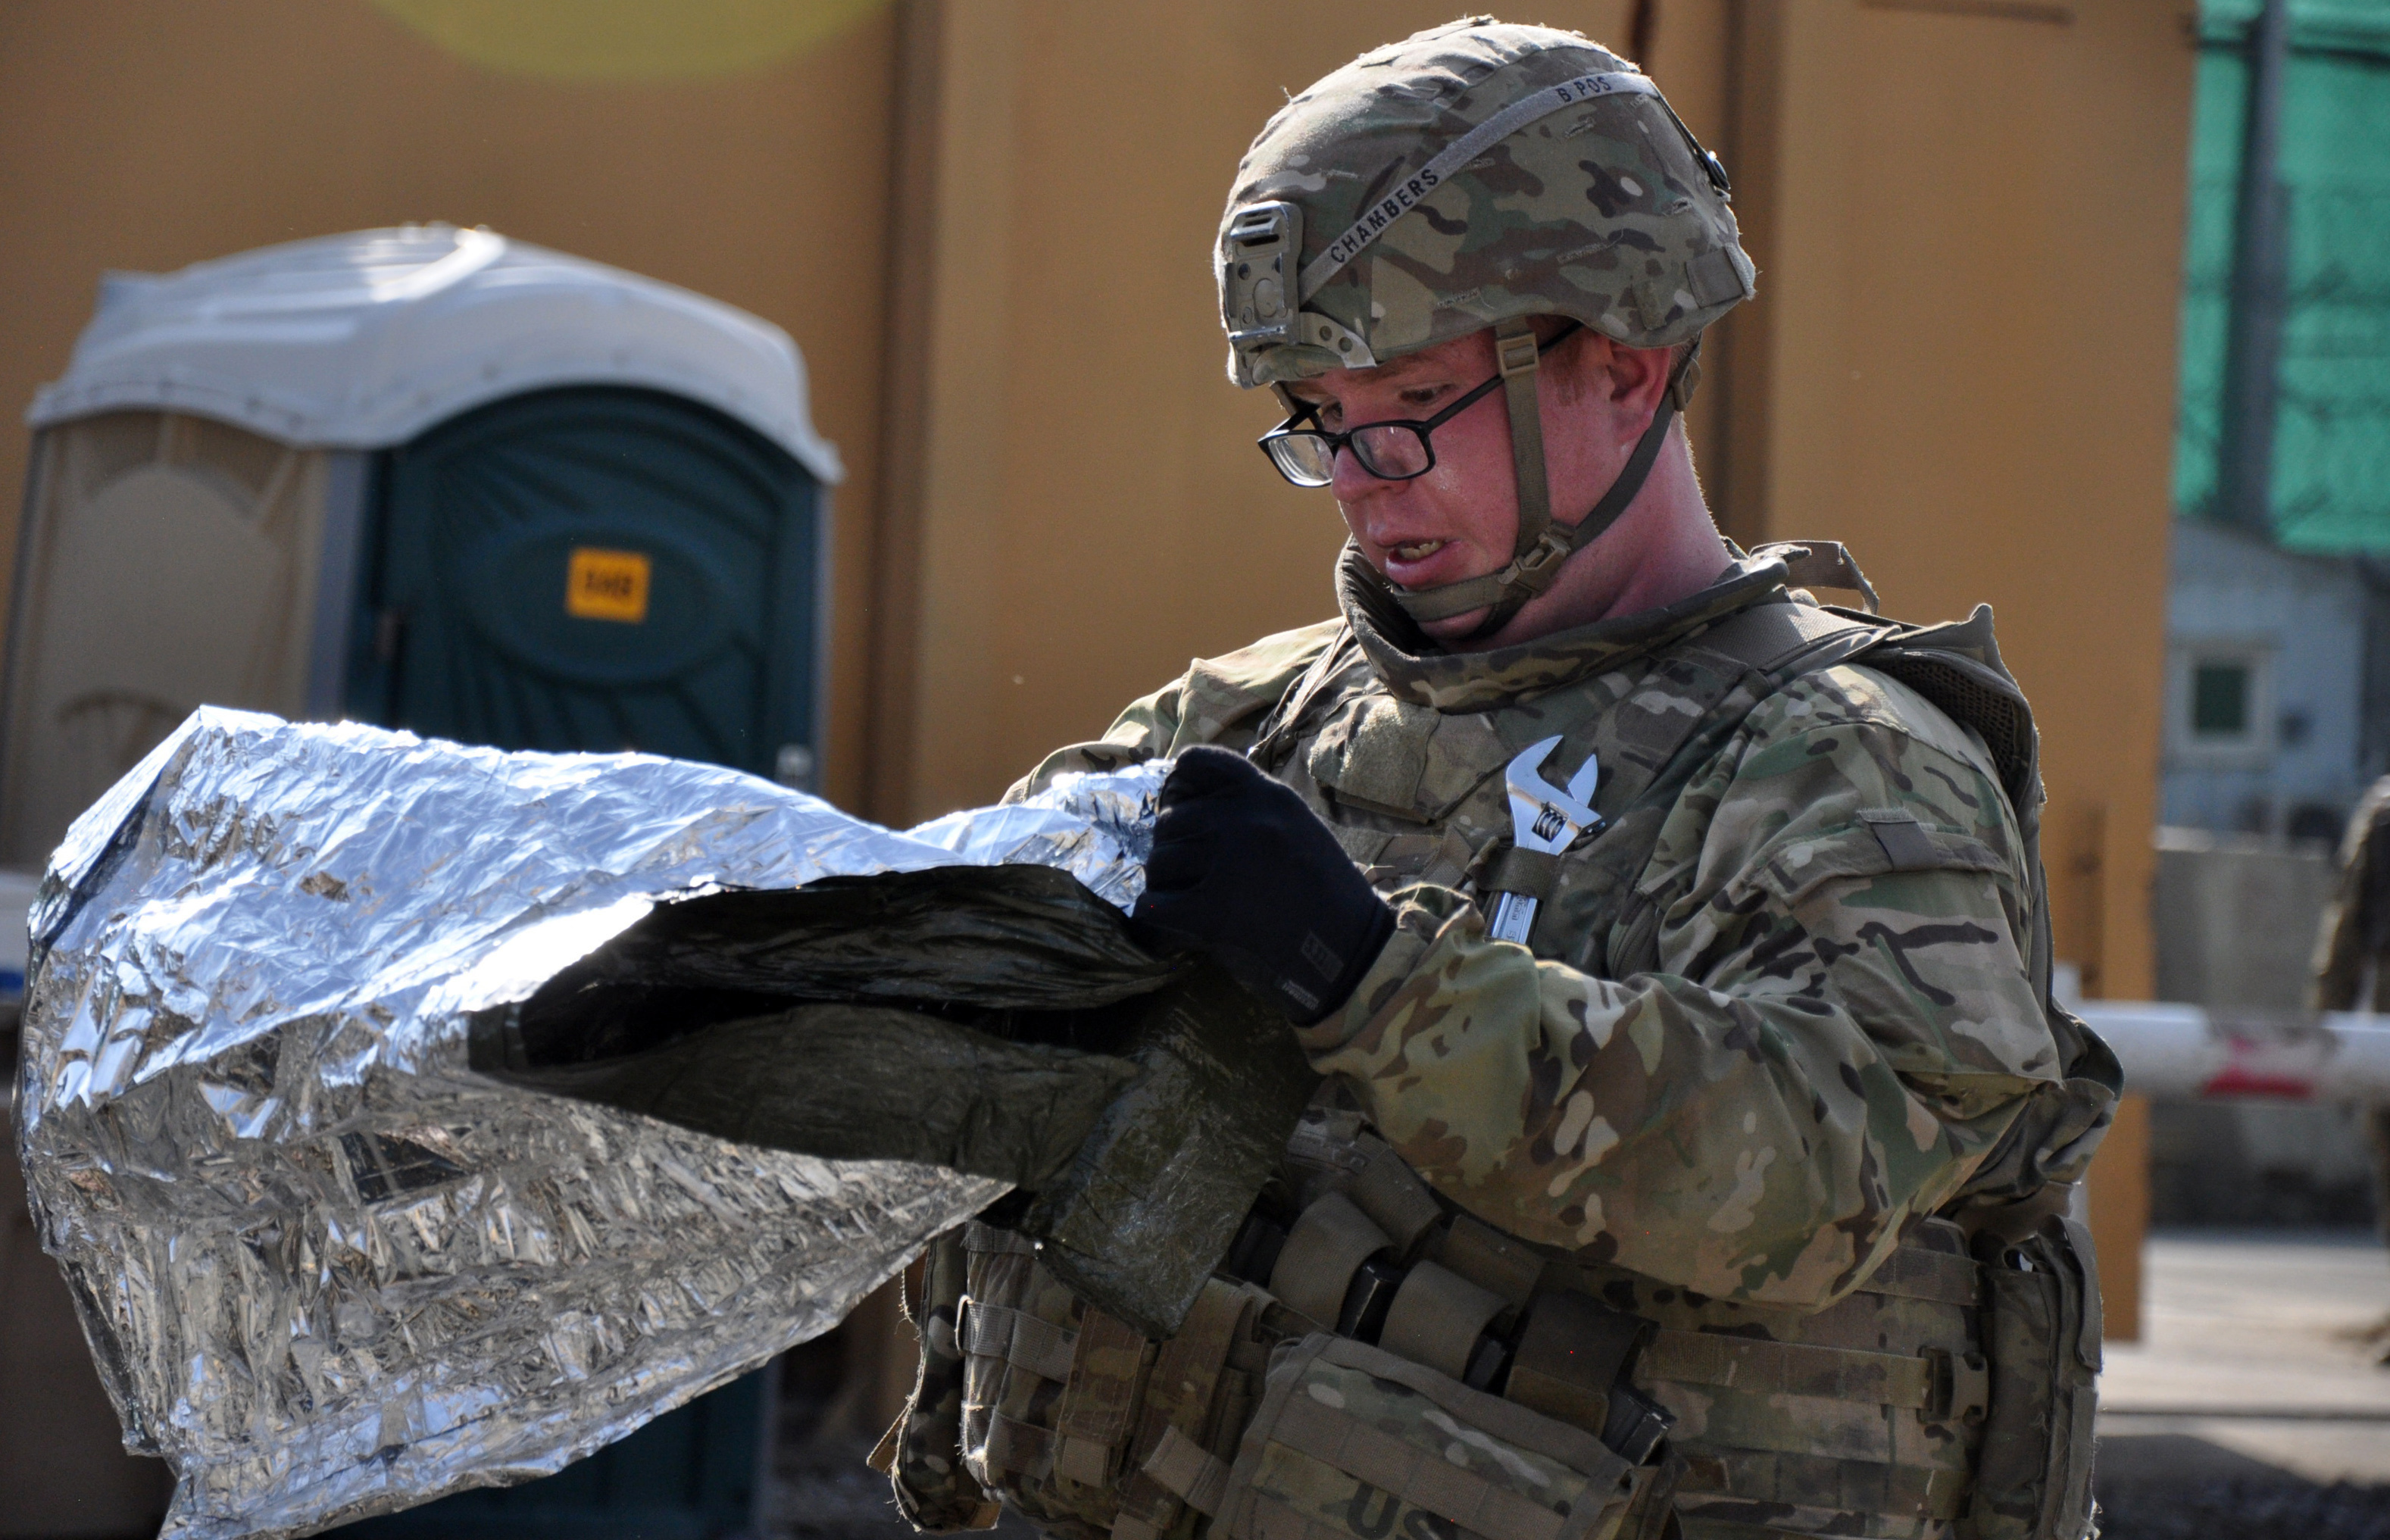 Oregon_Soldiers_complete_medical_training_141024-Z-NJ272-003.jpg